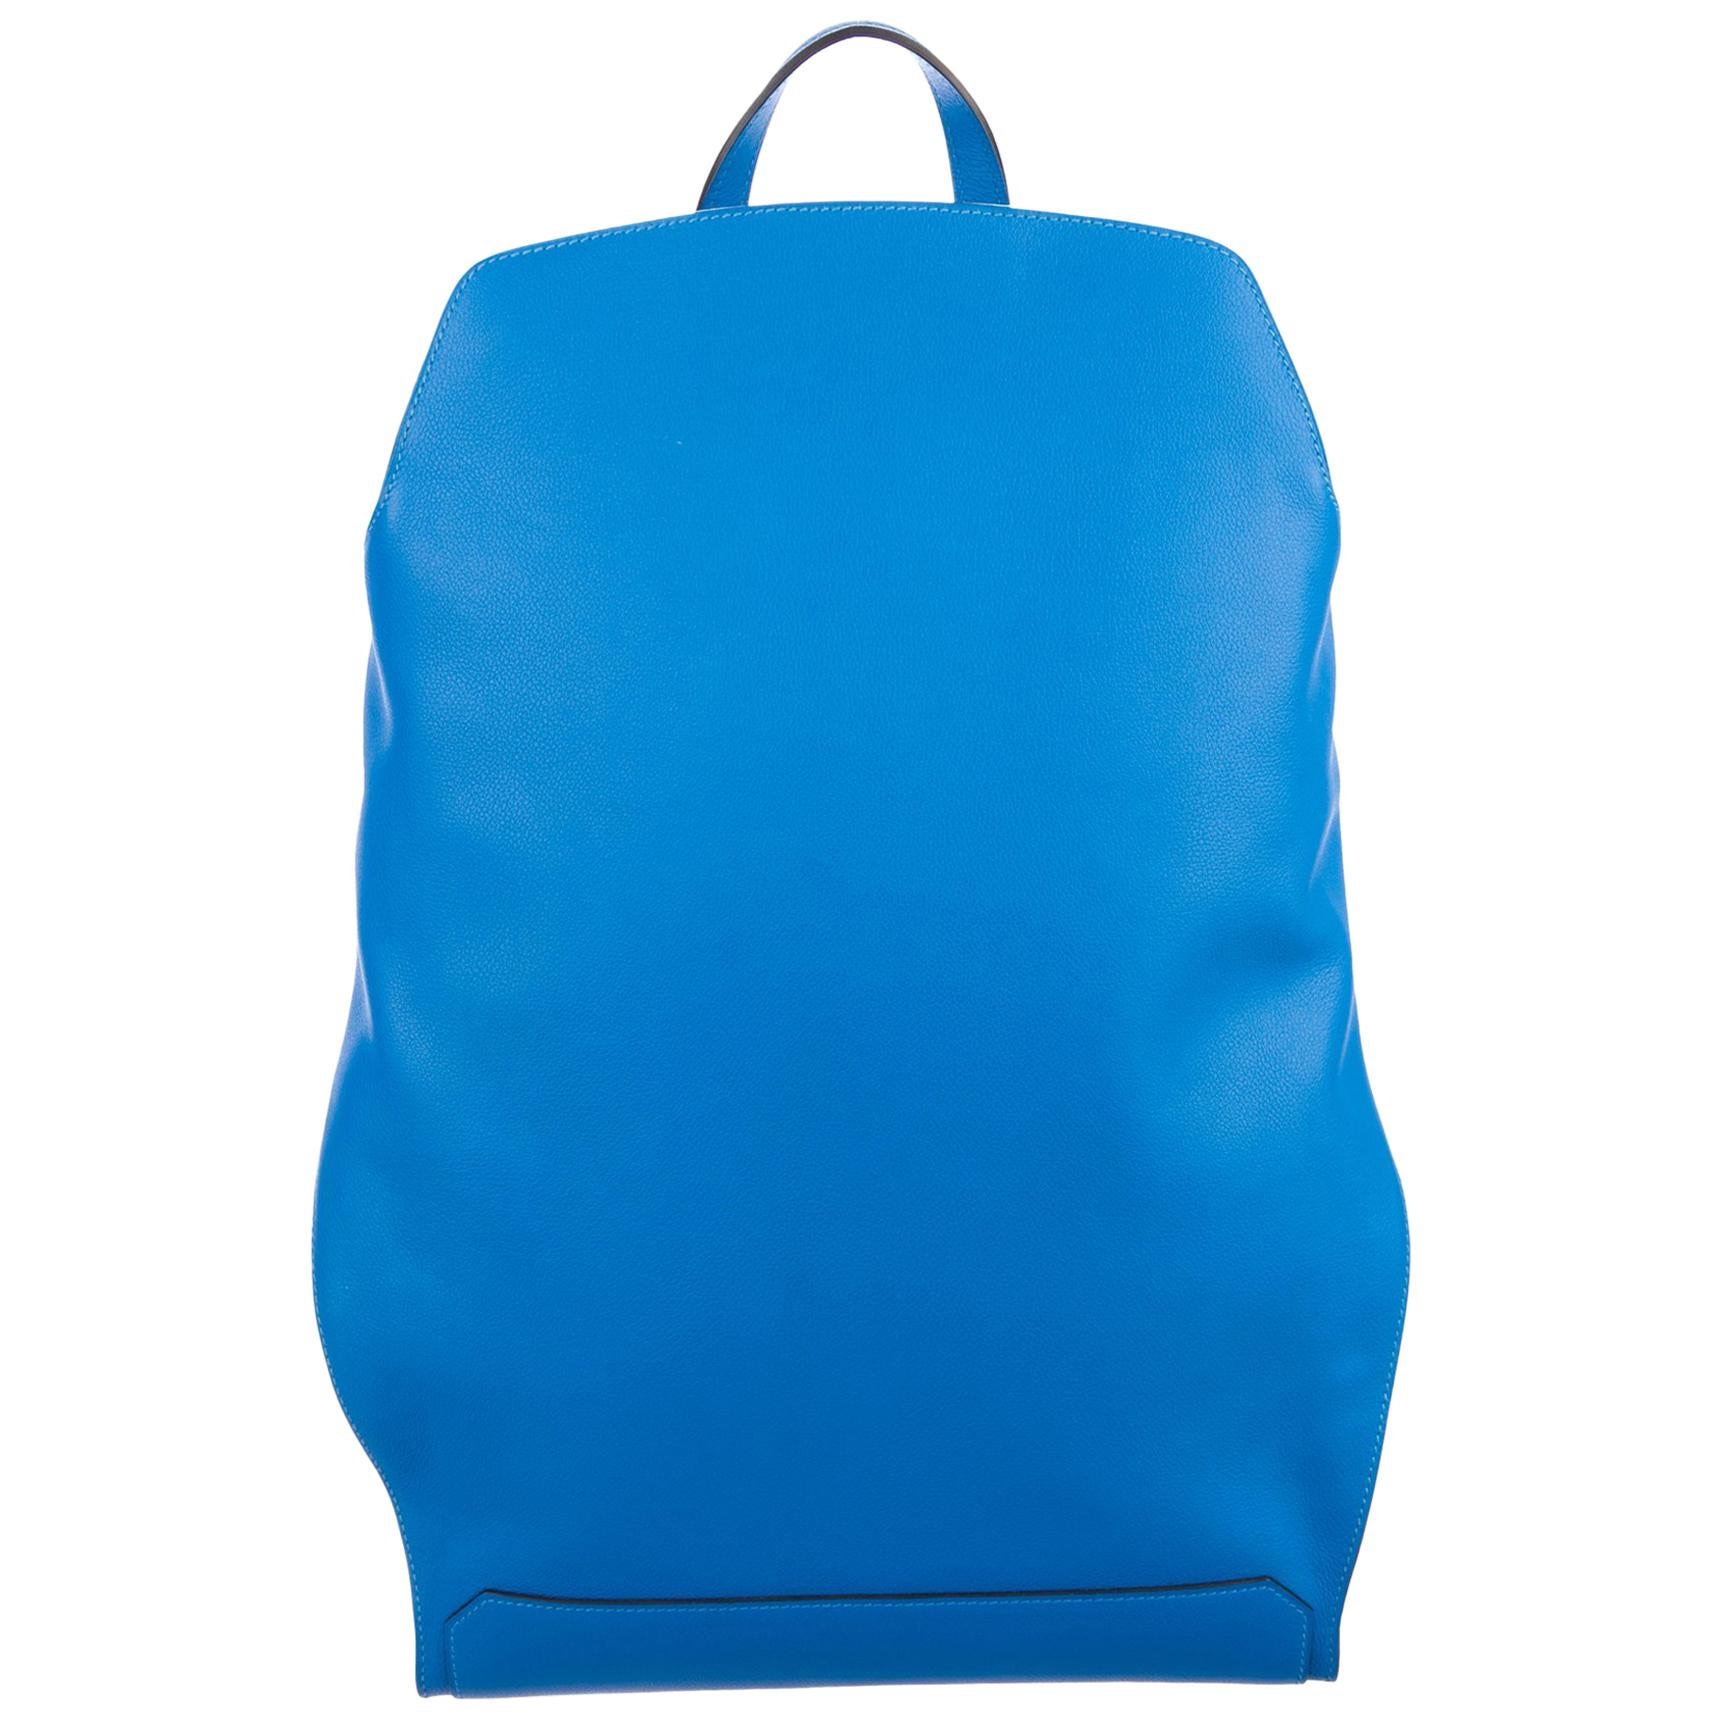 Hermes Blue Men's Women's Carryall Leather Backpack Travel Shoulder Bag in Box